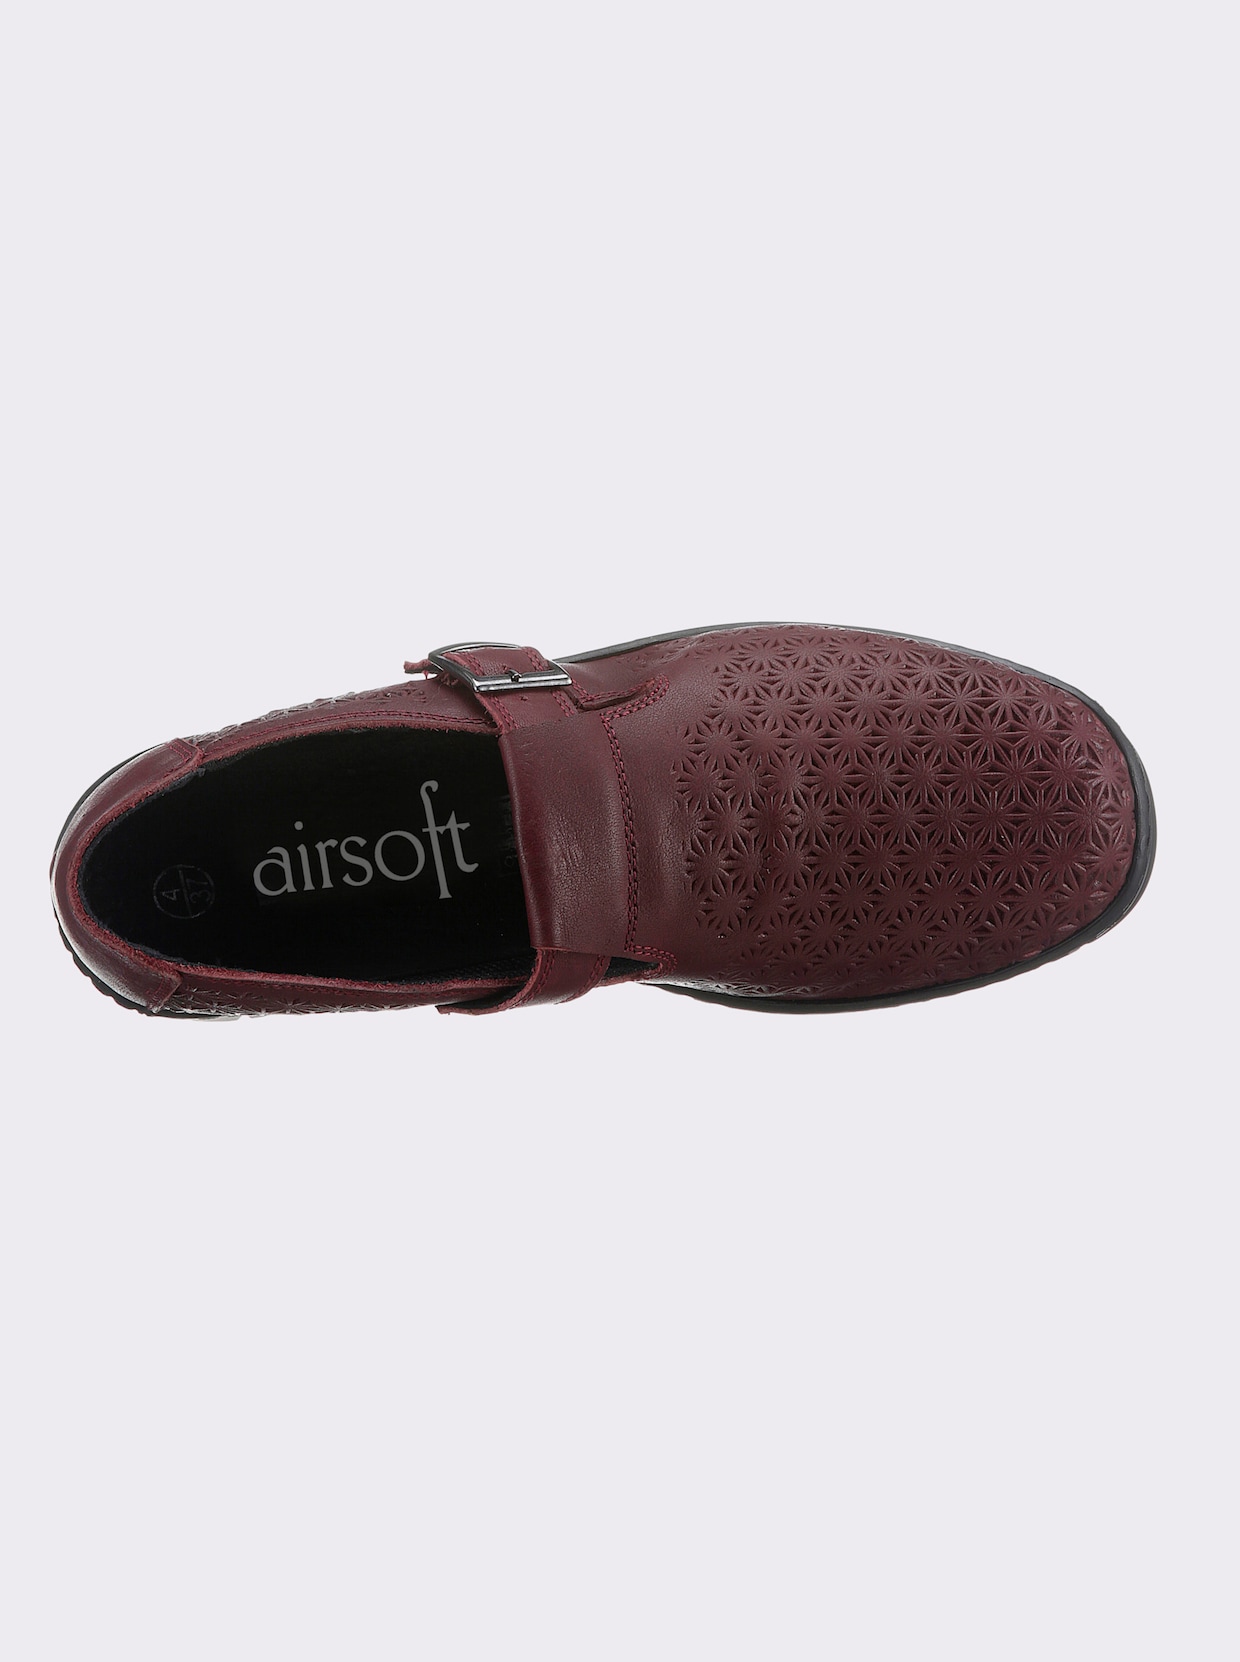 airsoft comfort+ Slipery - bordová